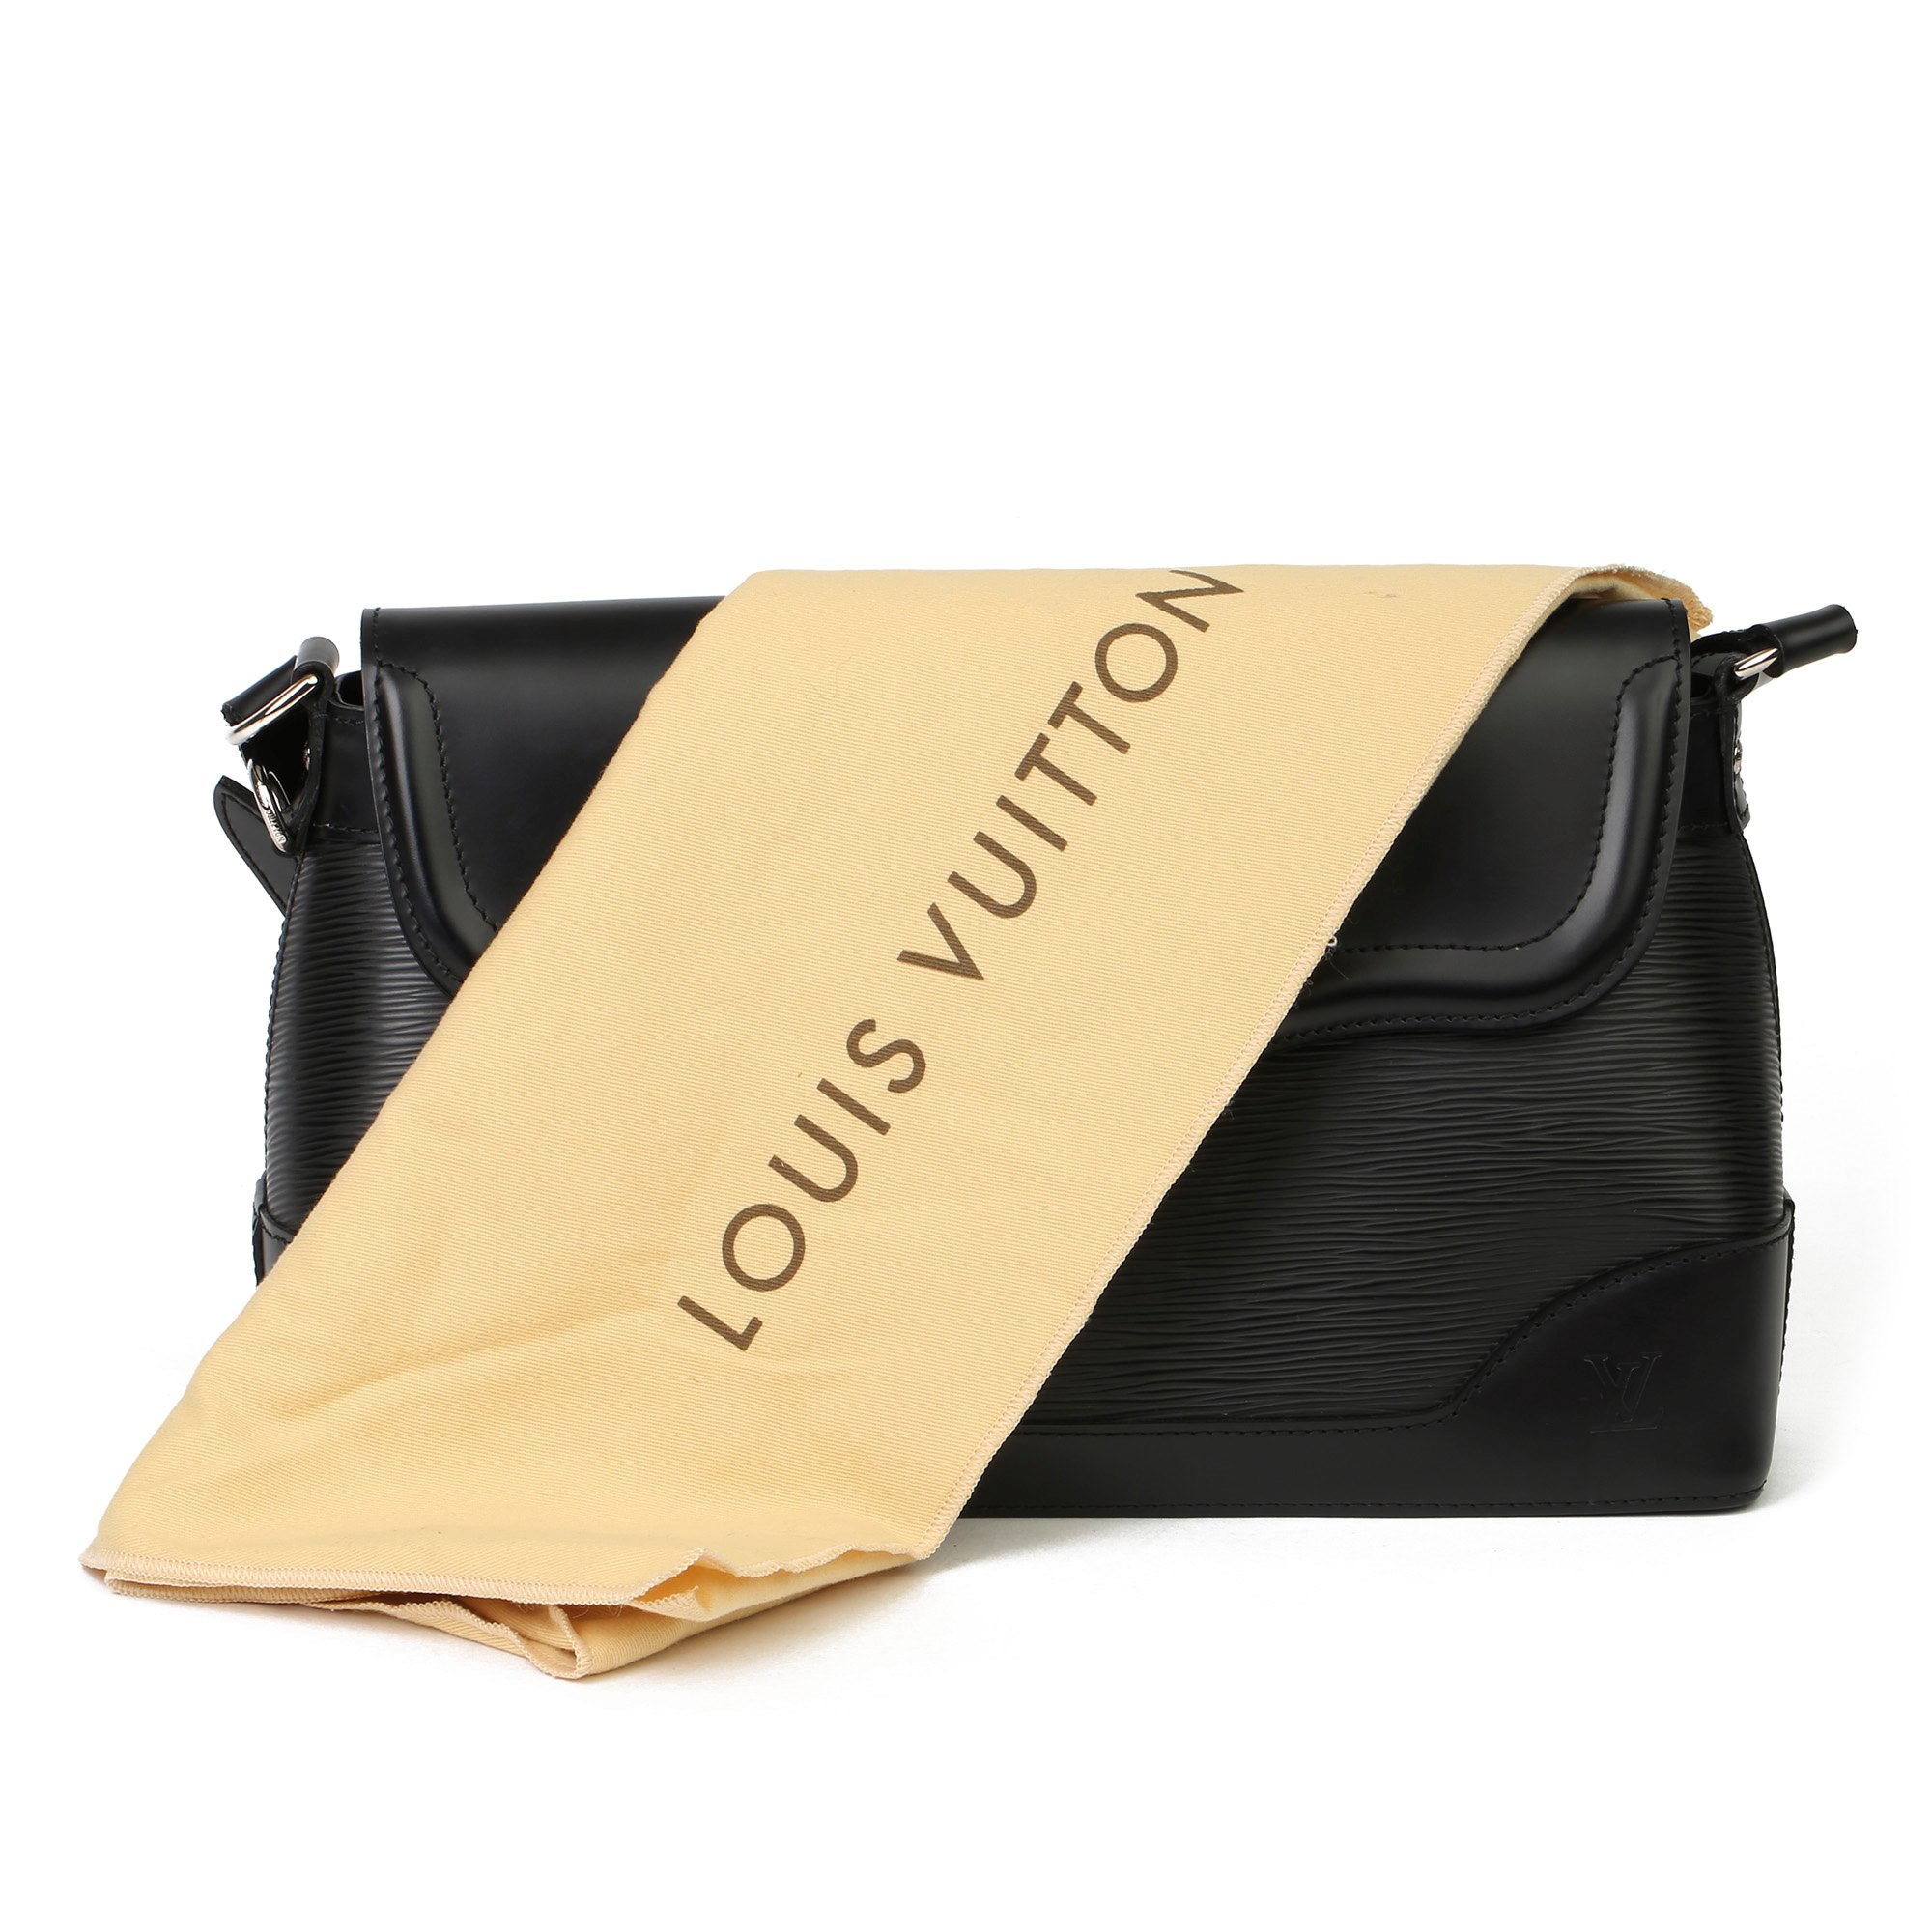 Louis Vuitton Black Epi Leather & Black Calfskin Leather Beverly Bag